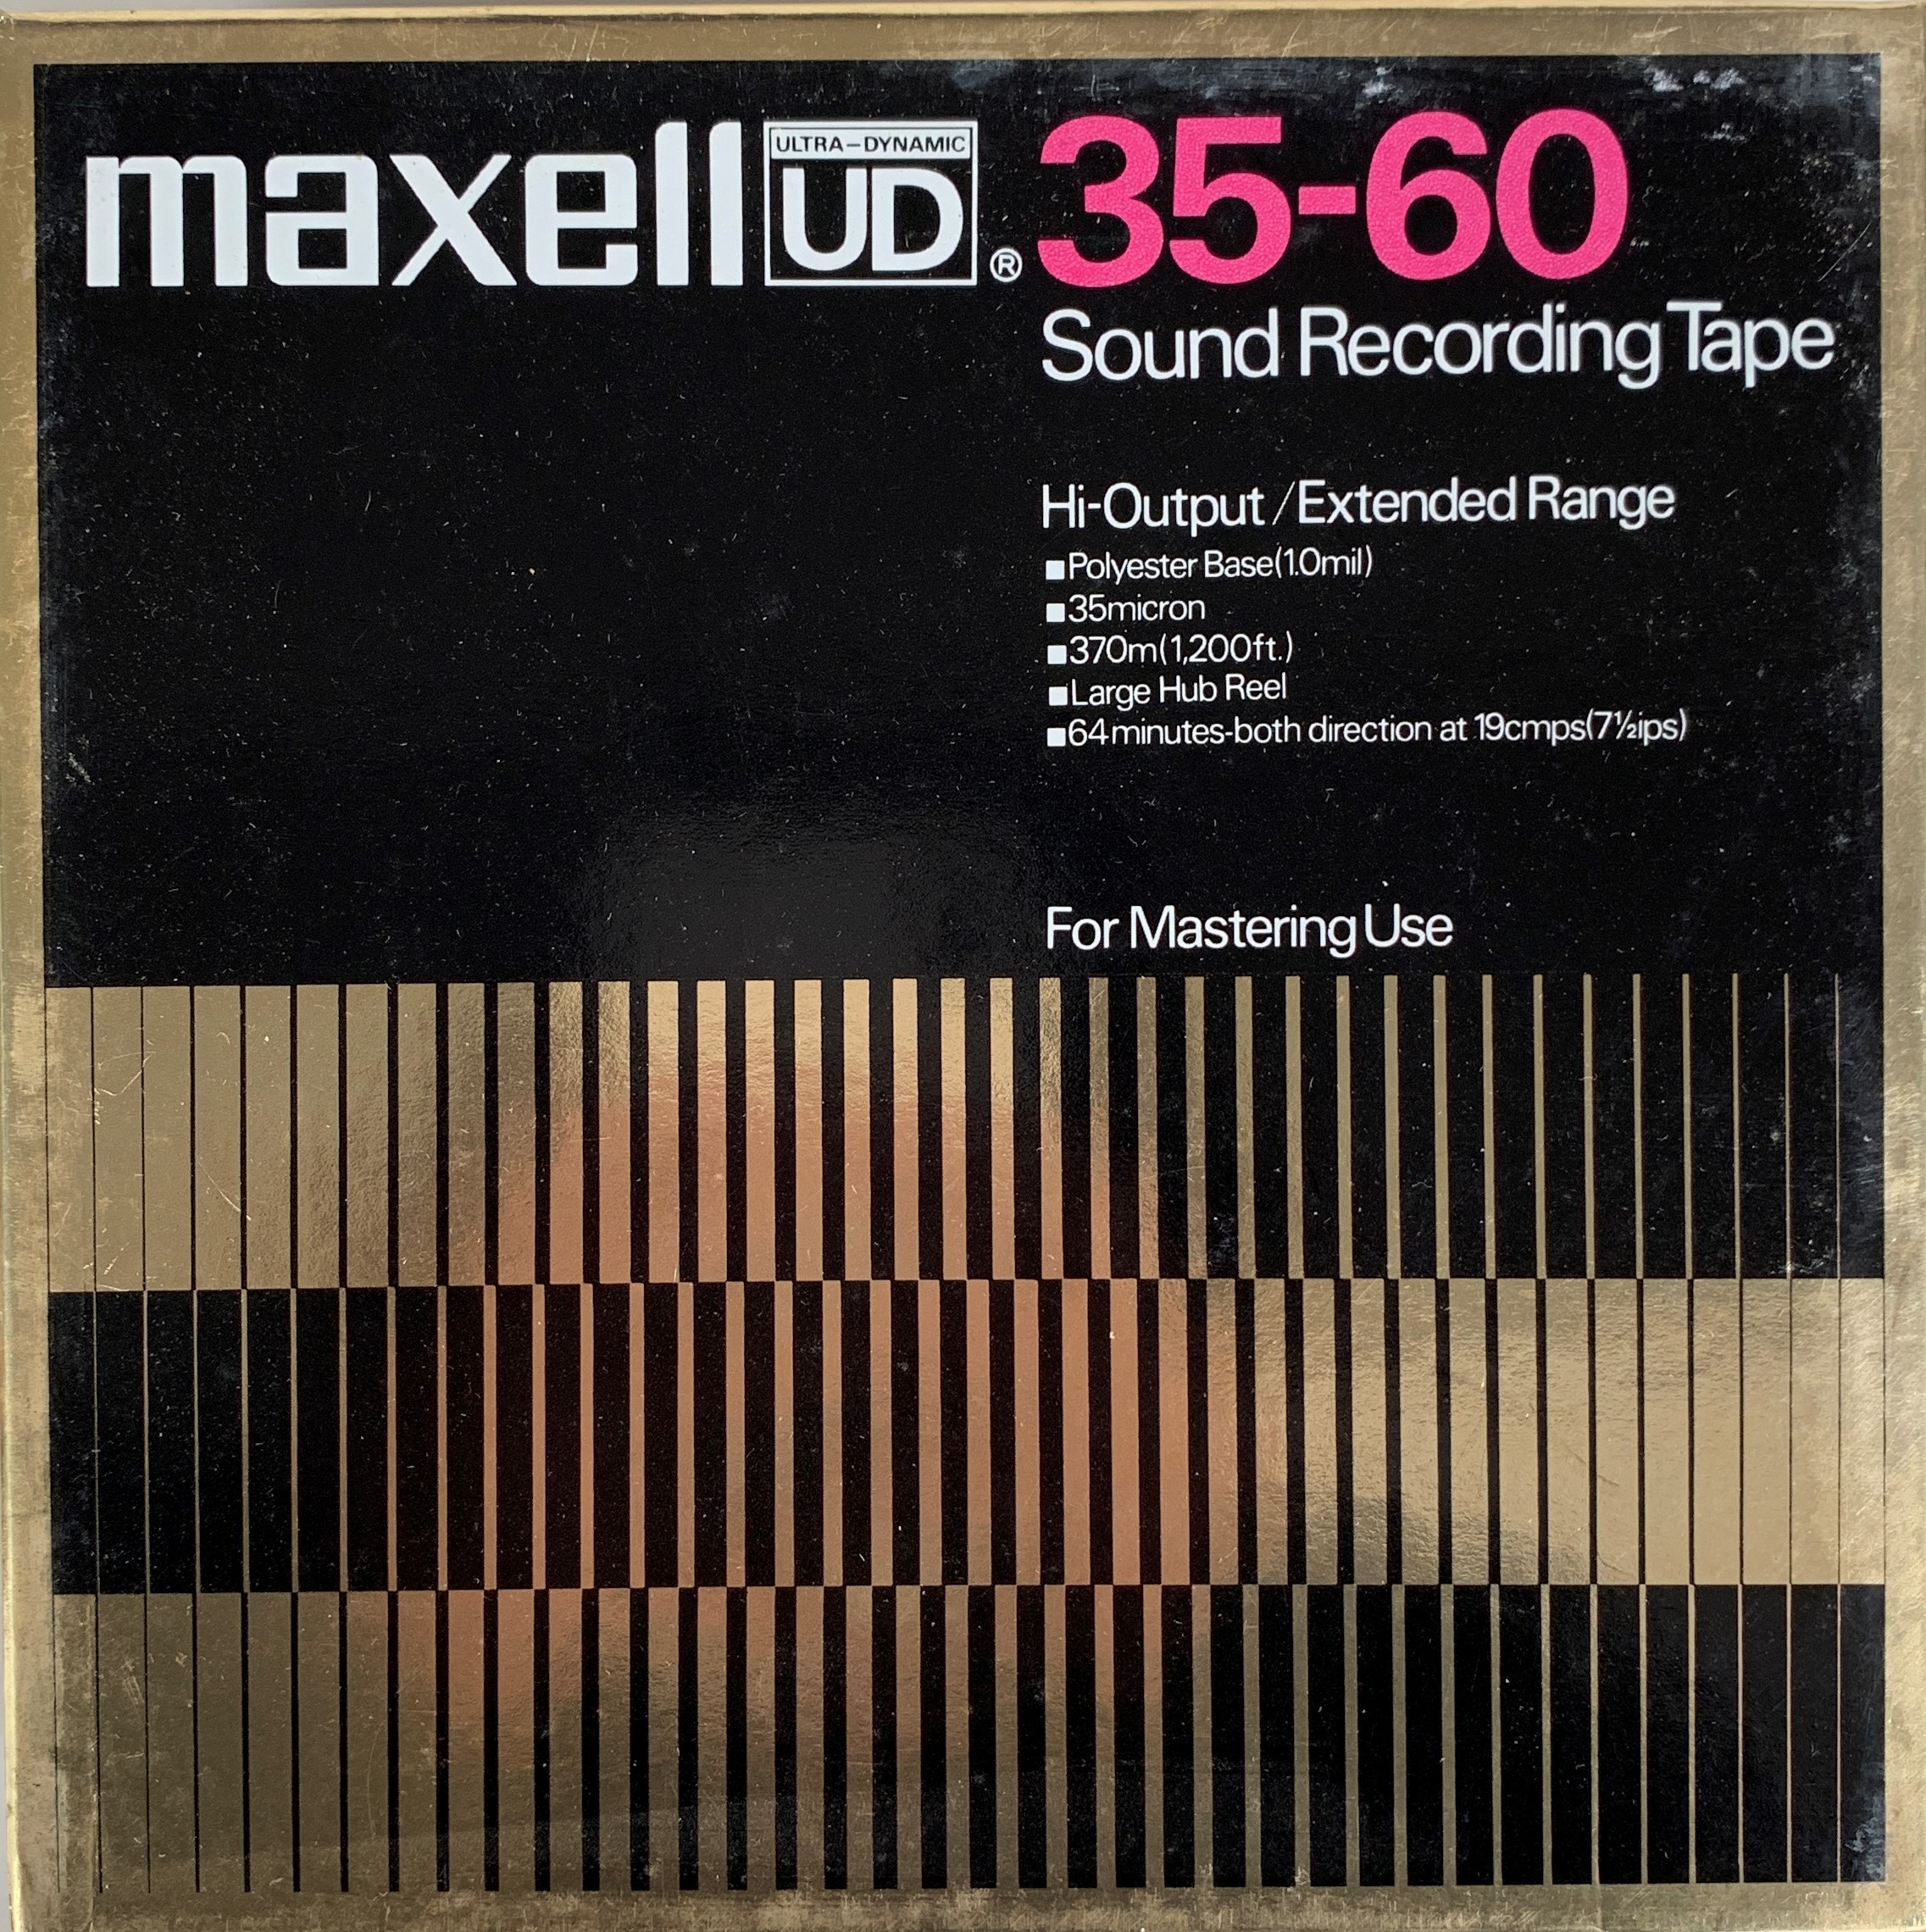 Maxell UD Early Gen Reel to Reel Tape, LP, 7 Reel, 1200 ft